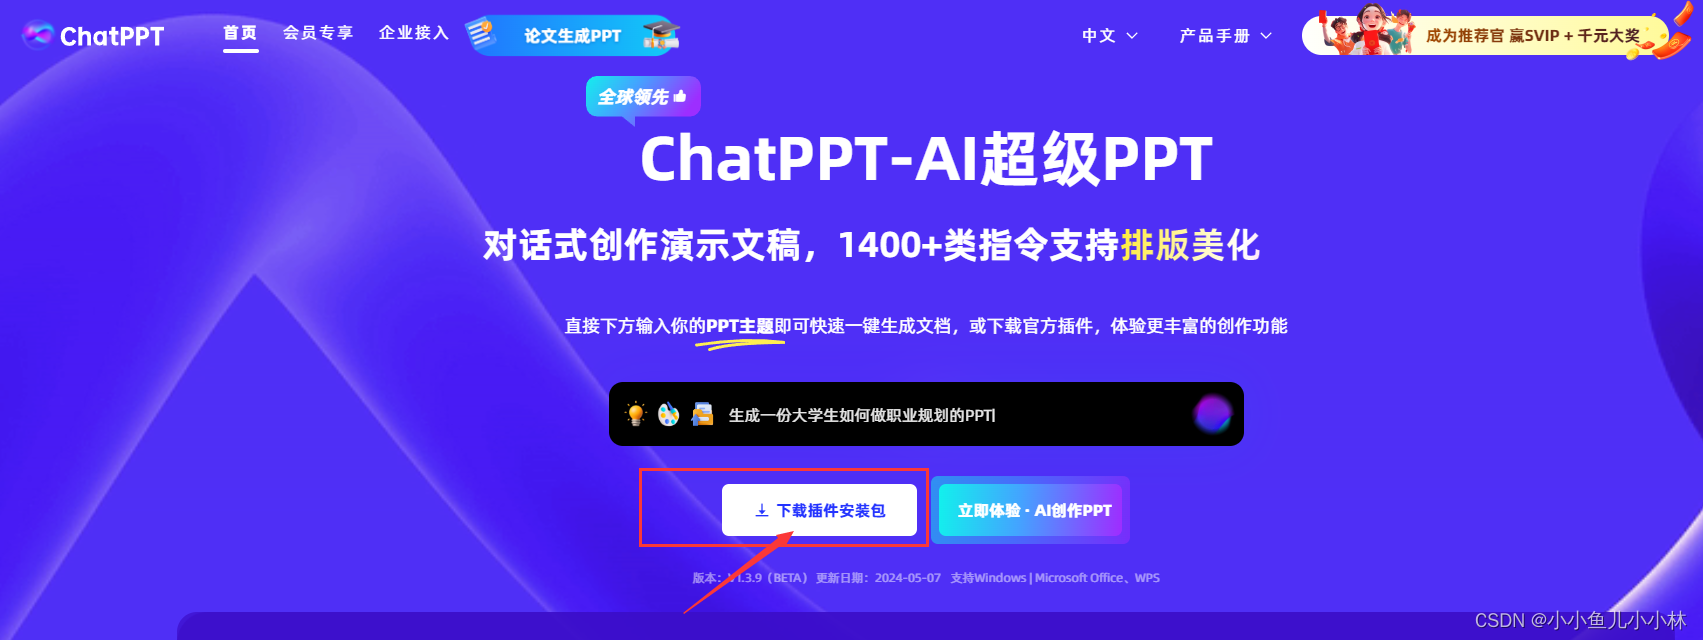 ChatPPT开启高效办公新时代，AI赋能PPT创作